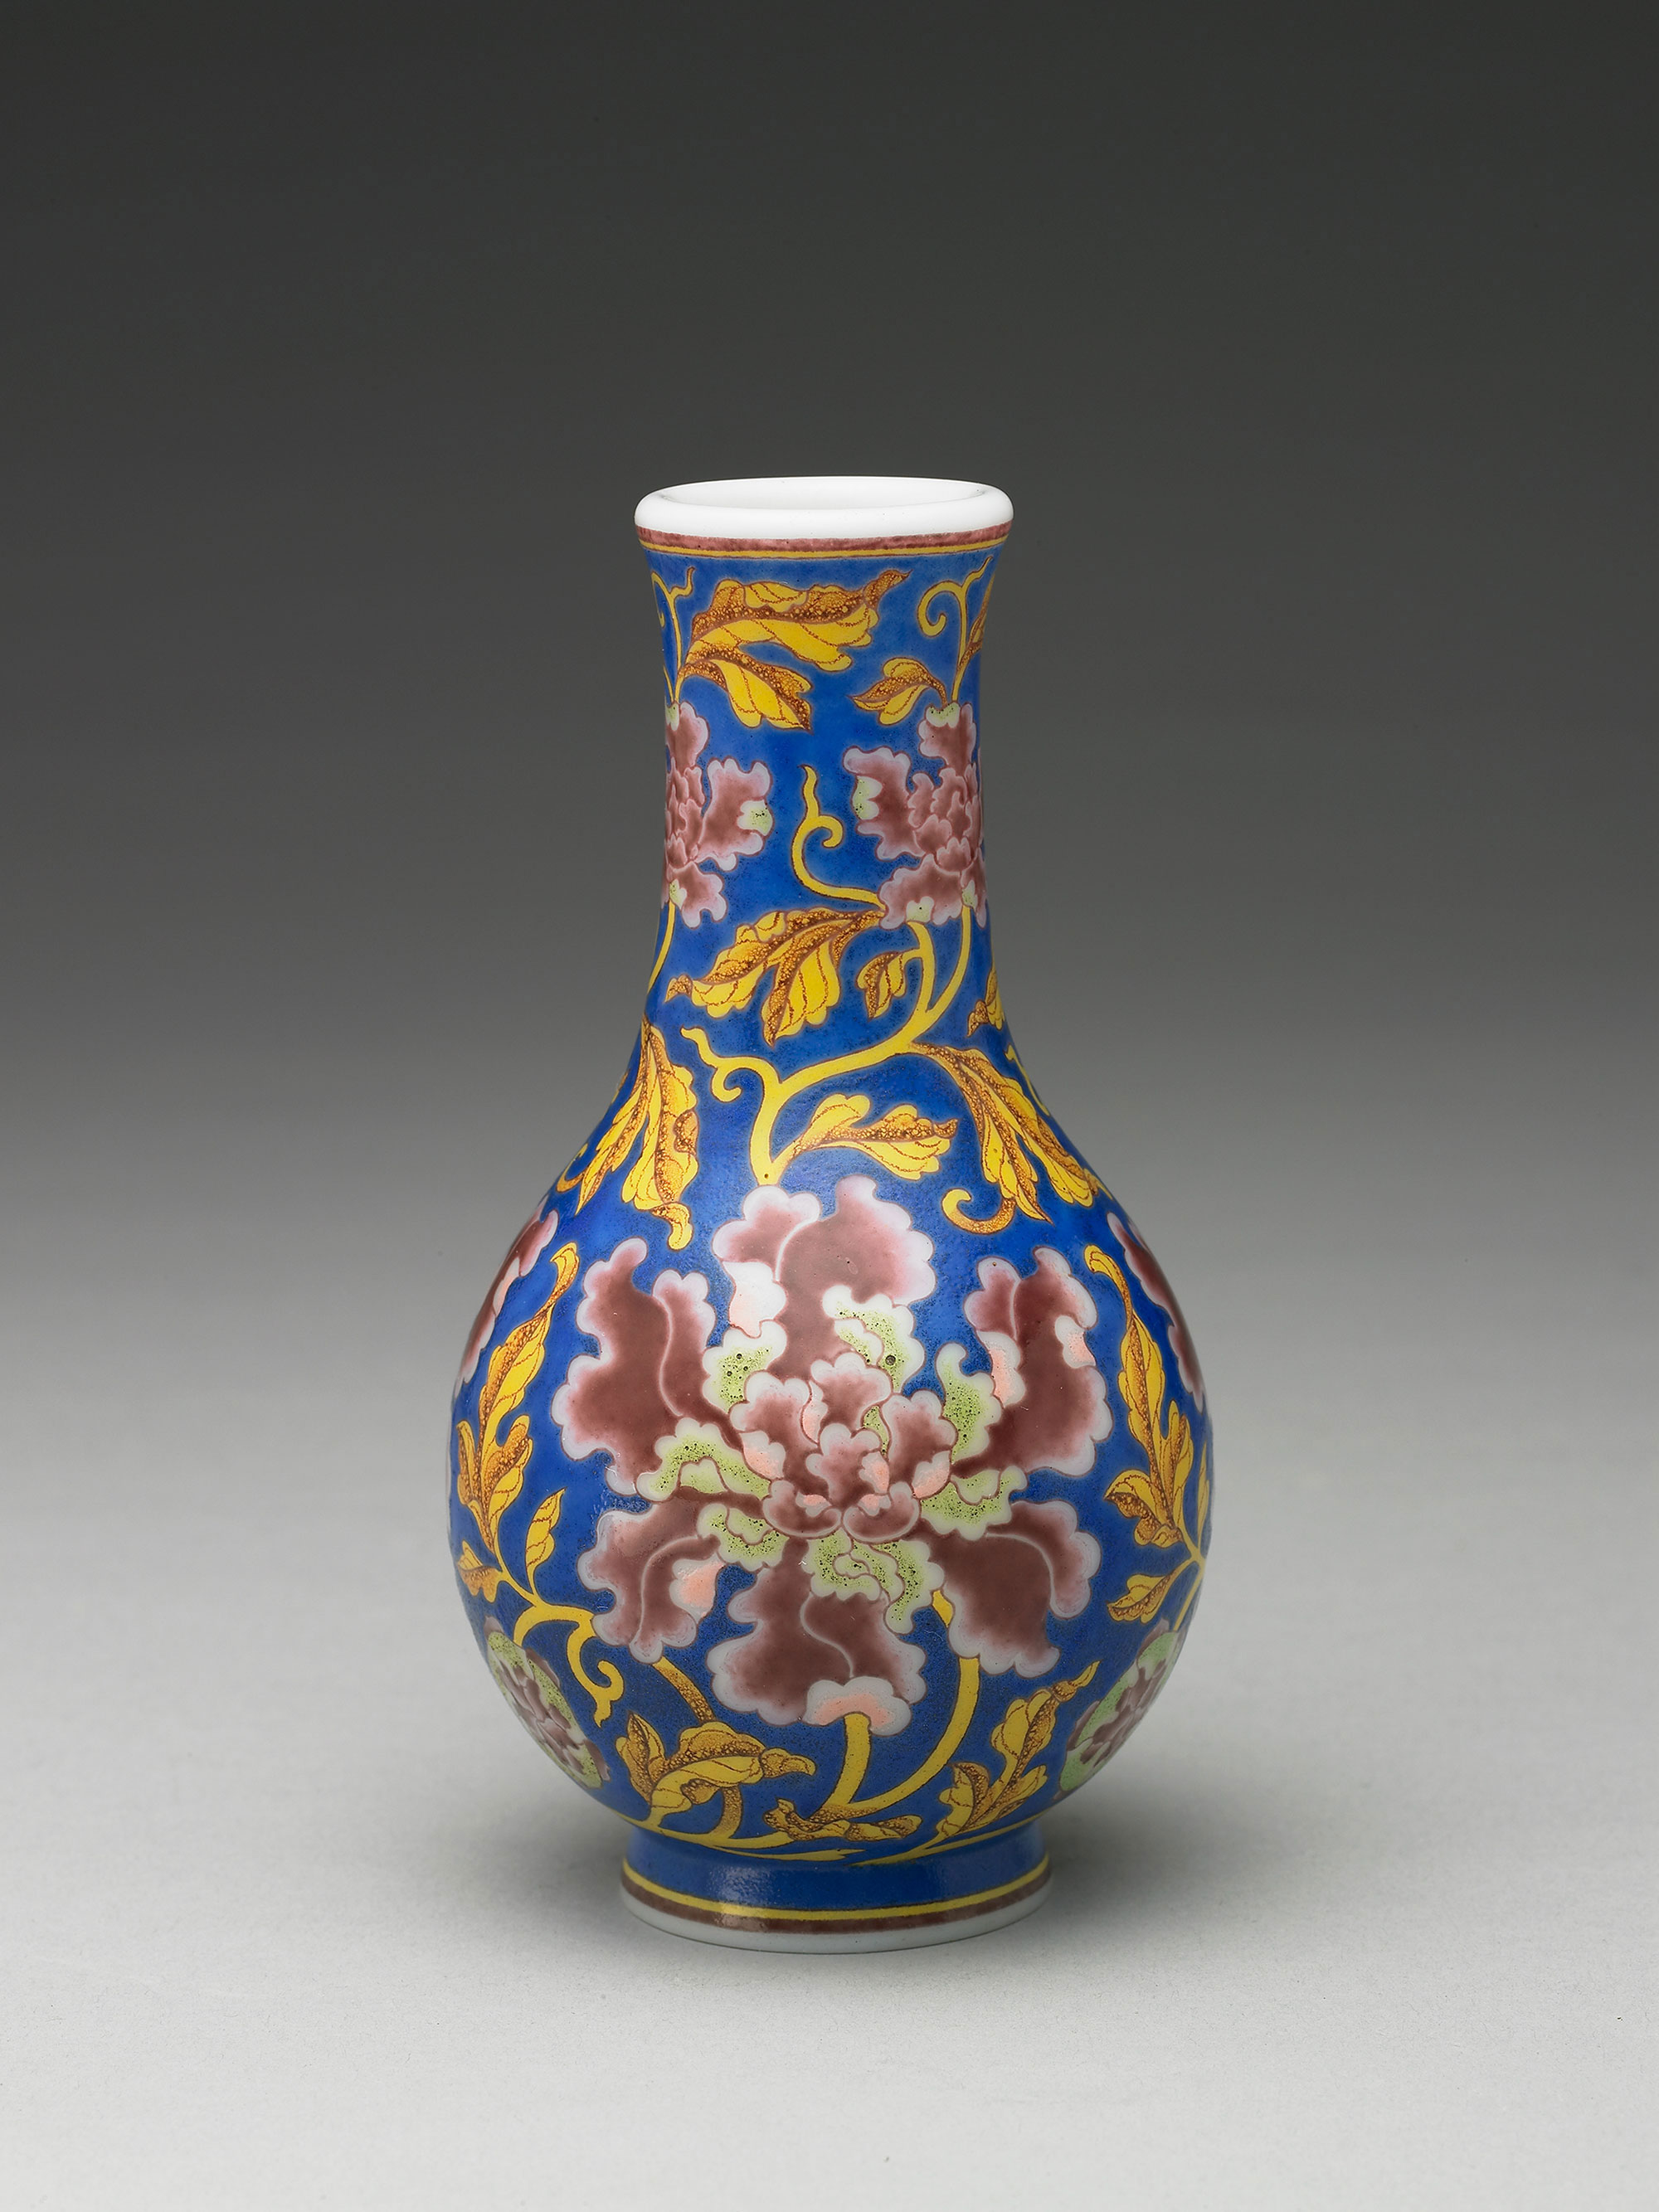 Glass gallbladder-shaped vase with peonies in painted enamels